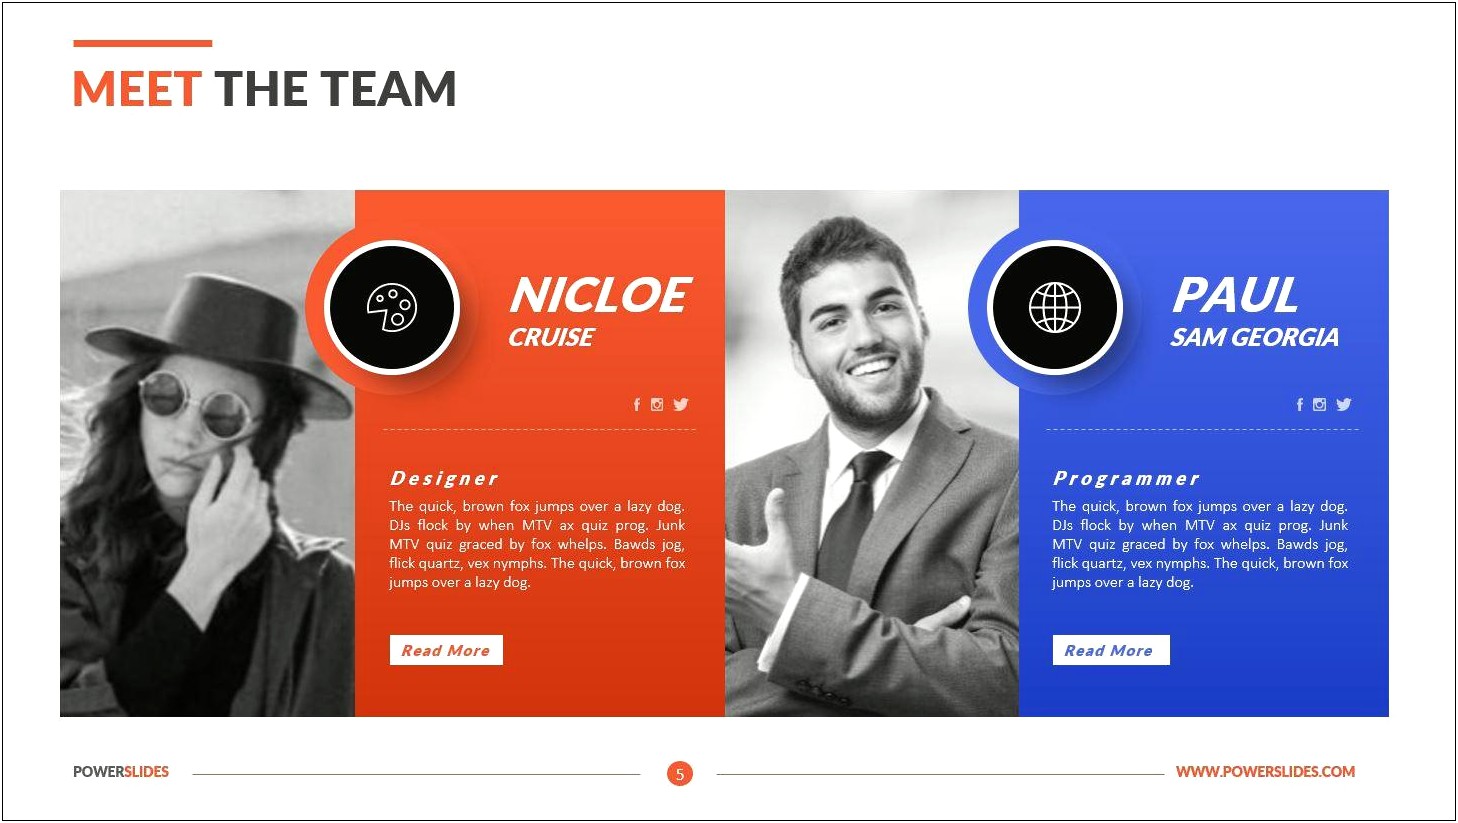 Meet The Team Powerpoint Template Free